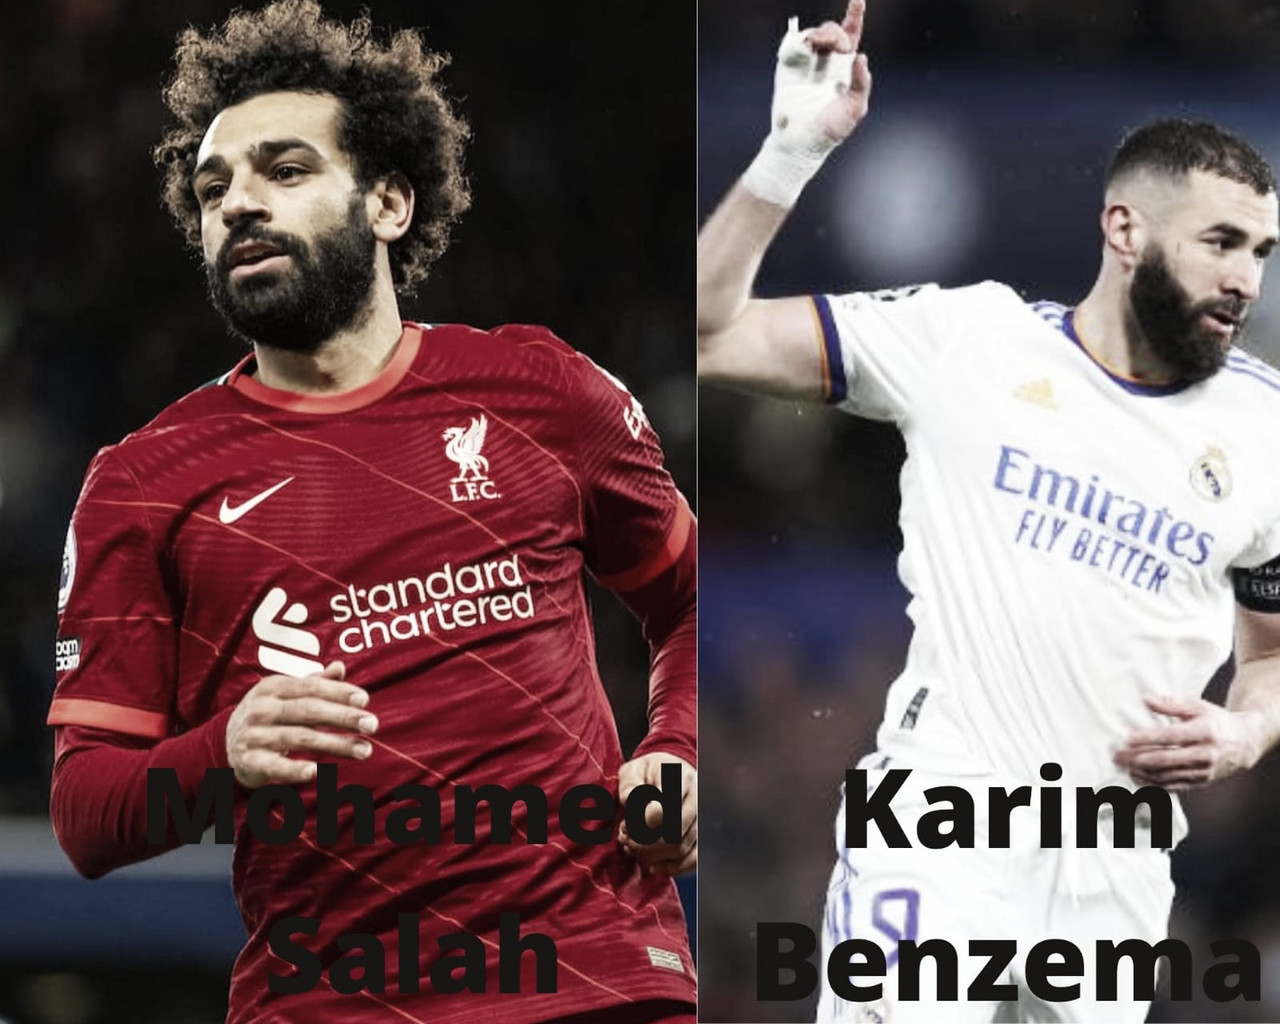 Los pichichis: Karim Benzema vs Mohamed Salah